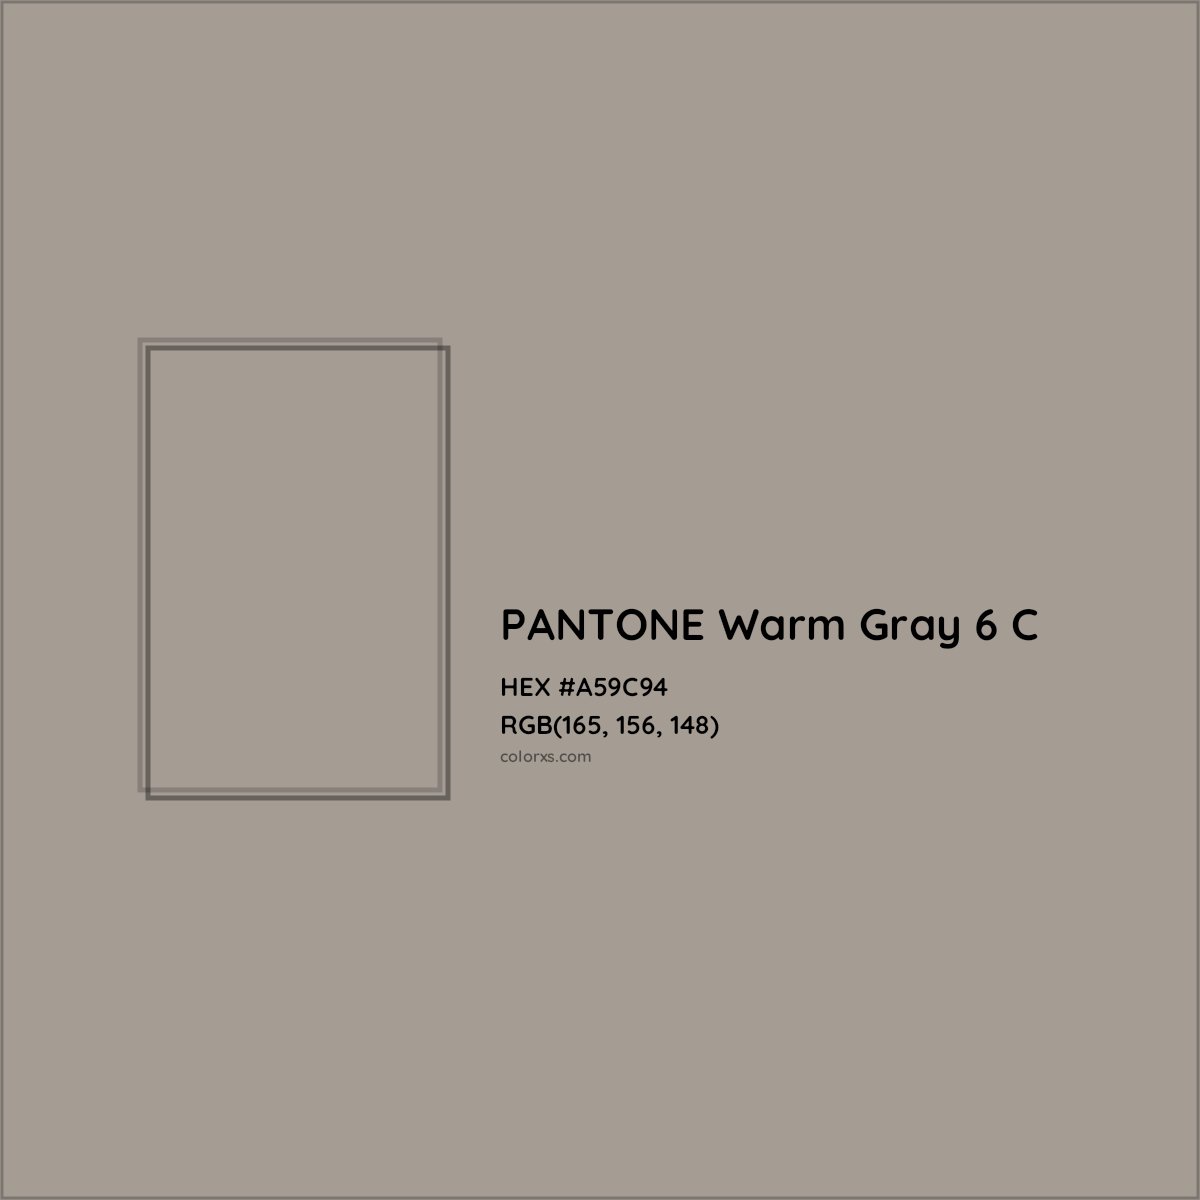 HEX #A59C94 PANTONE Warm Gray 6 C CMS Pantone PMS - Color Code